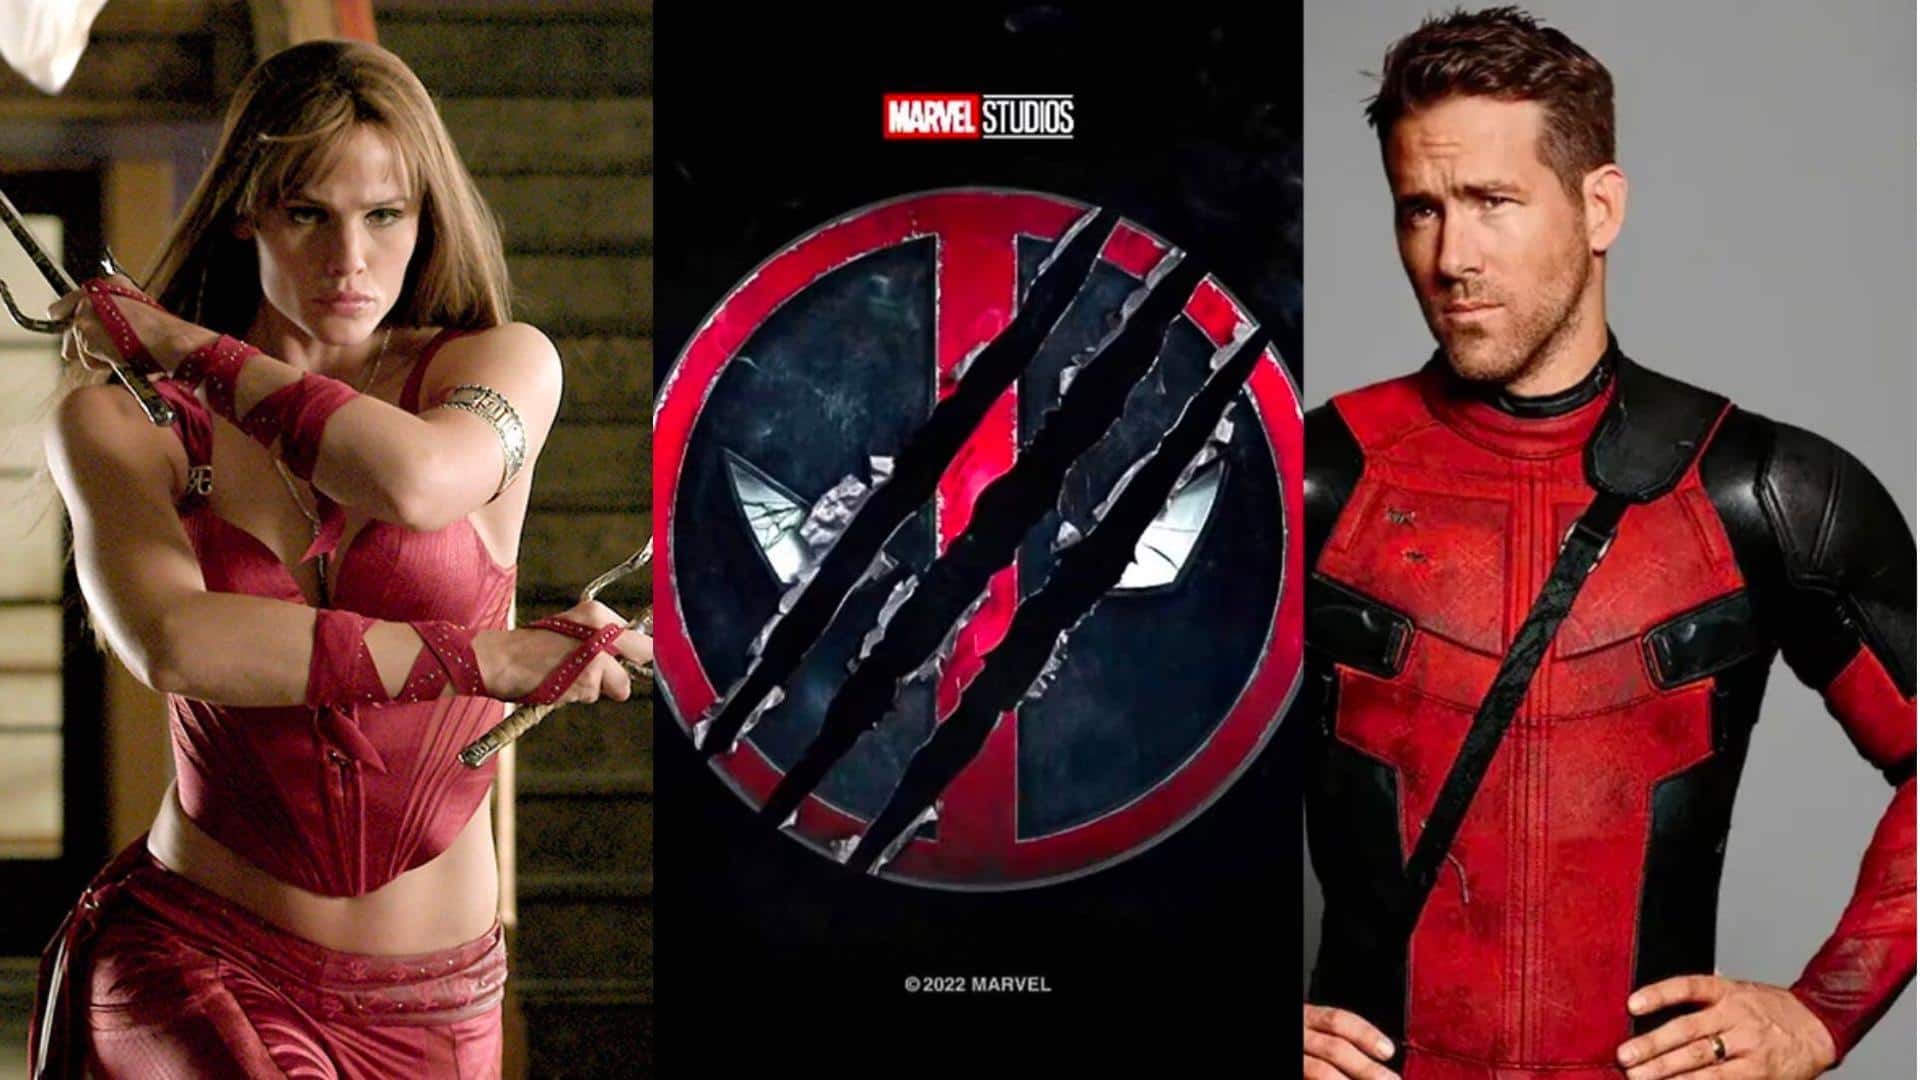 'Deadpool 3' casts Jennifer Garner: Every actor confirmed so far